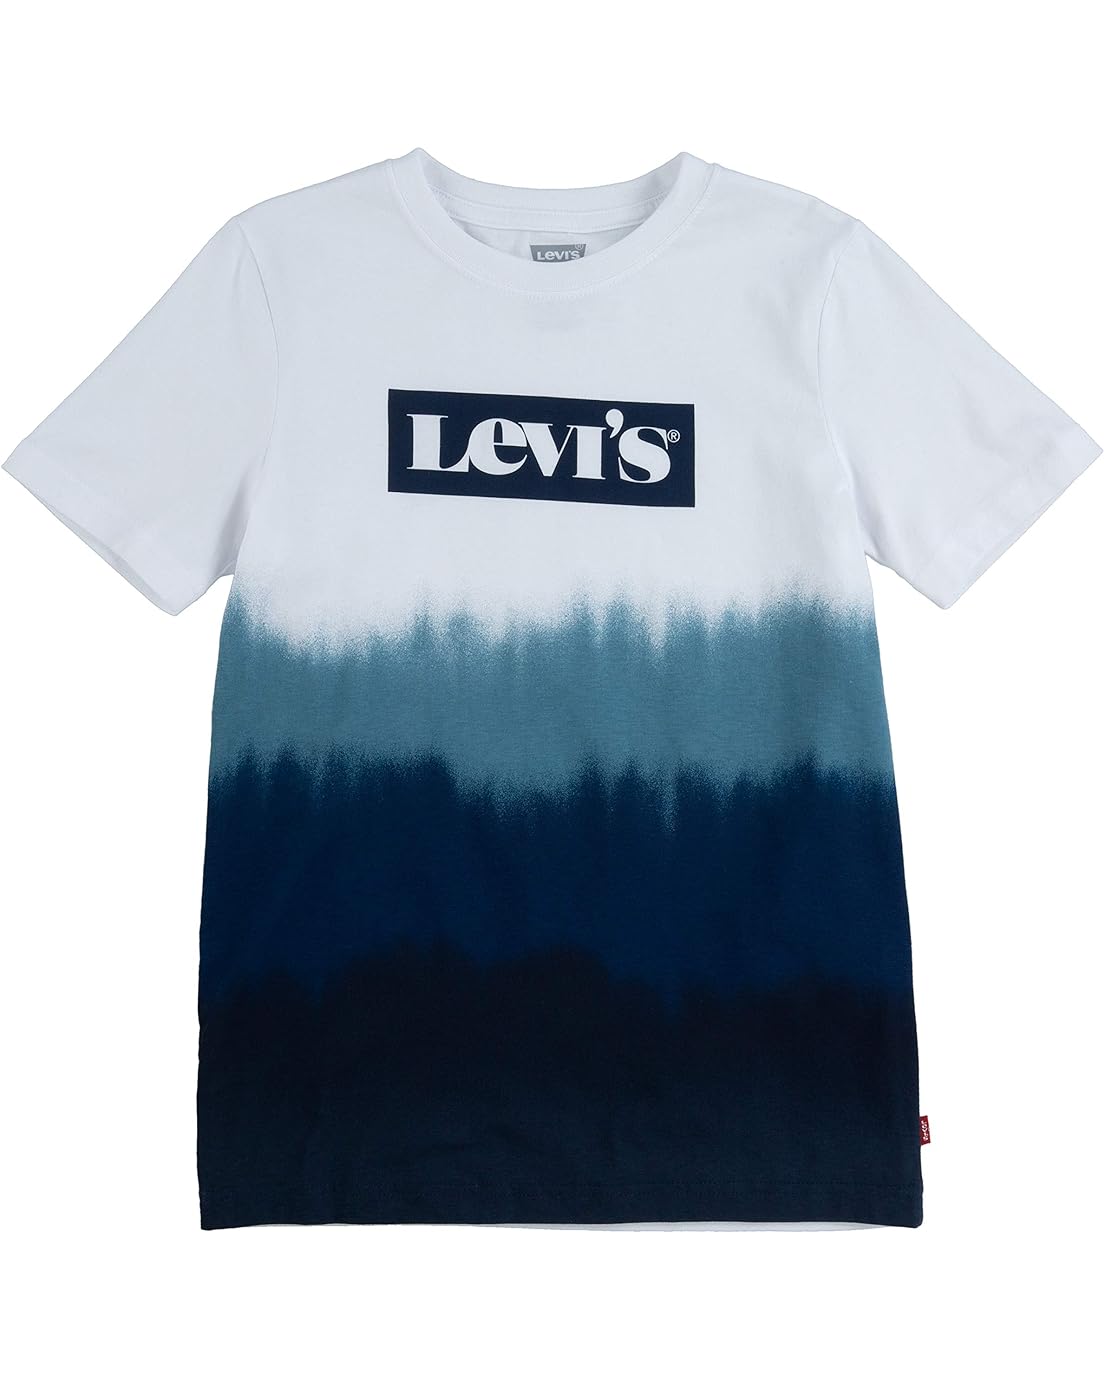 Levis Kids Graphic T-Shirt (Big Kids)